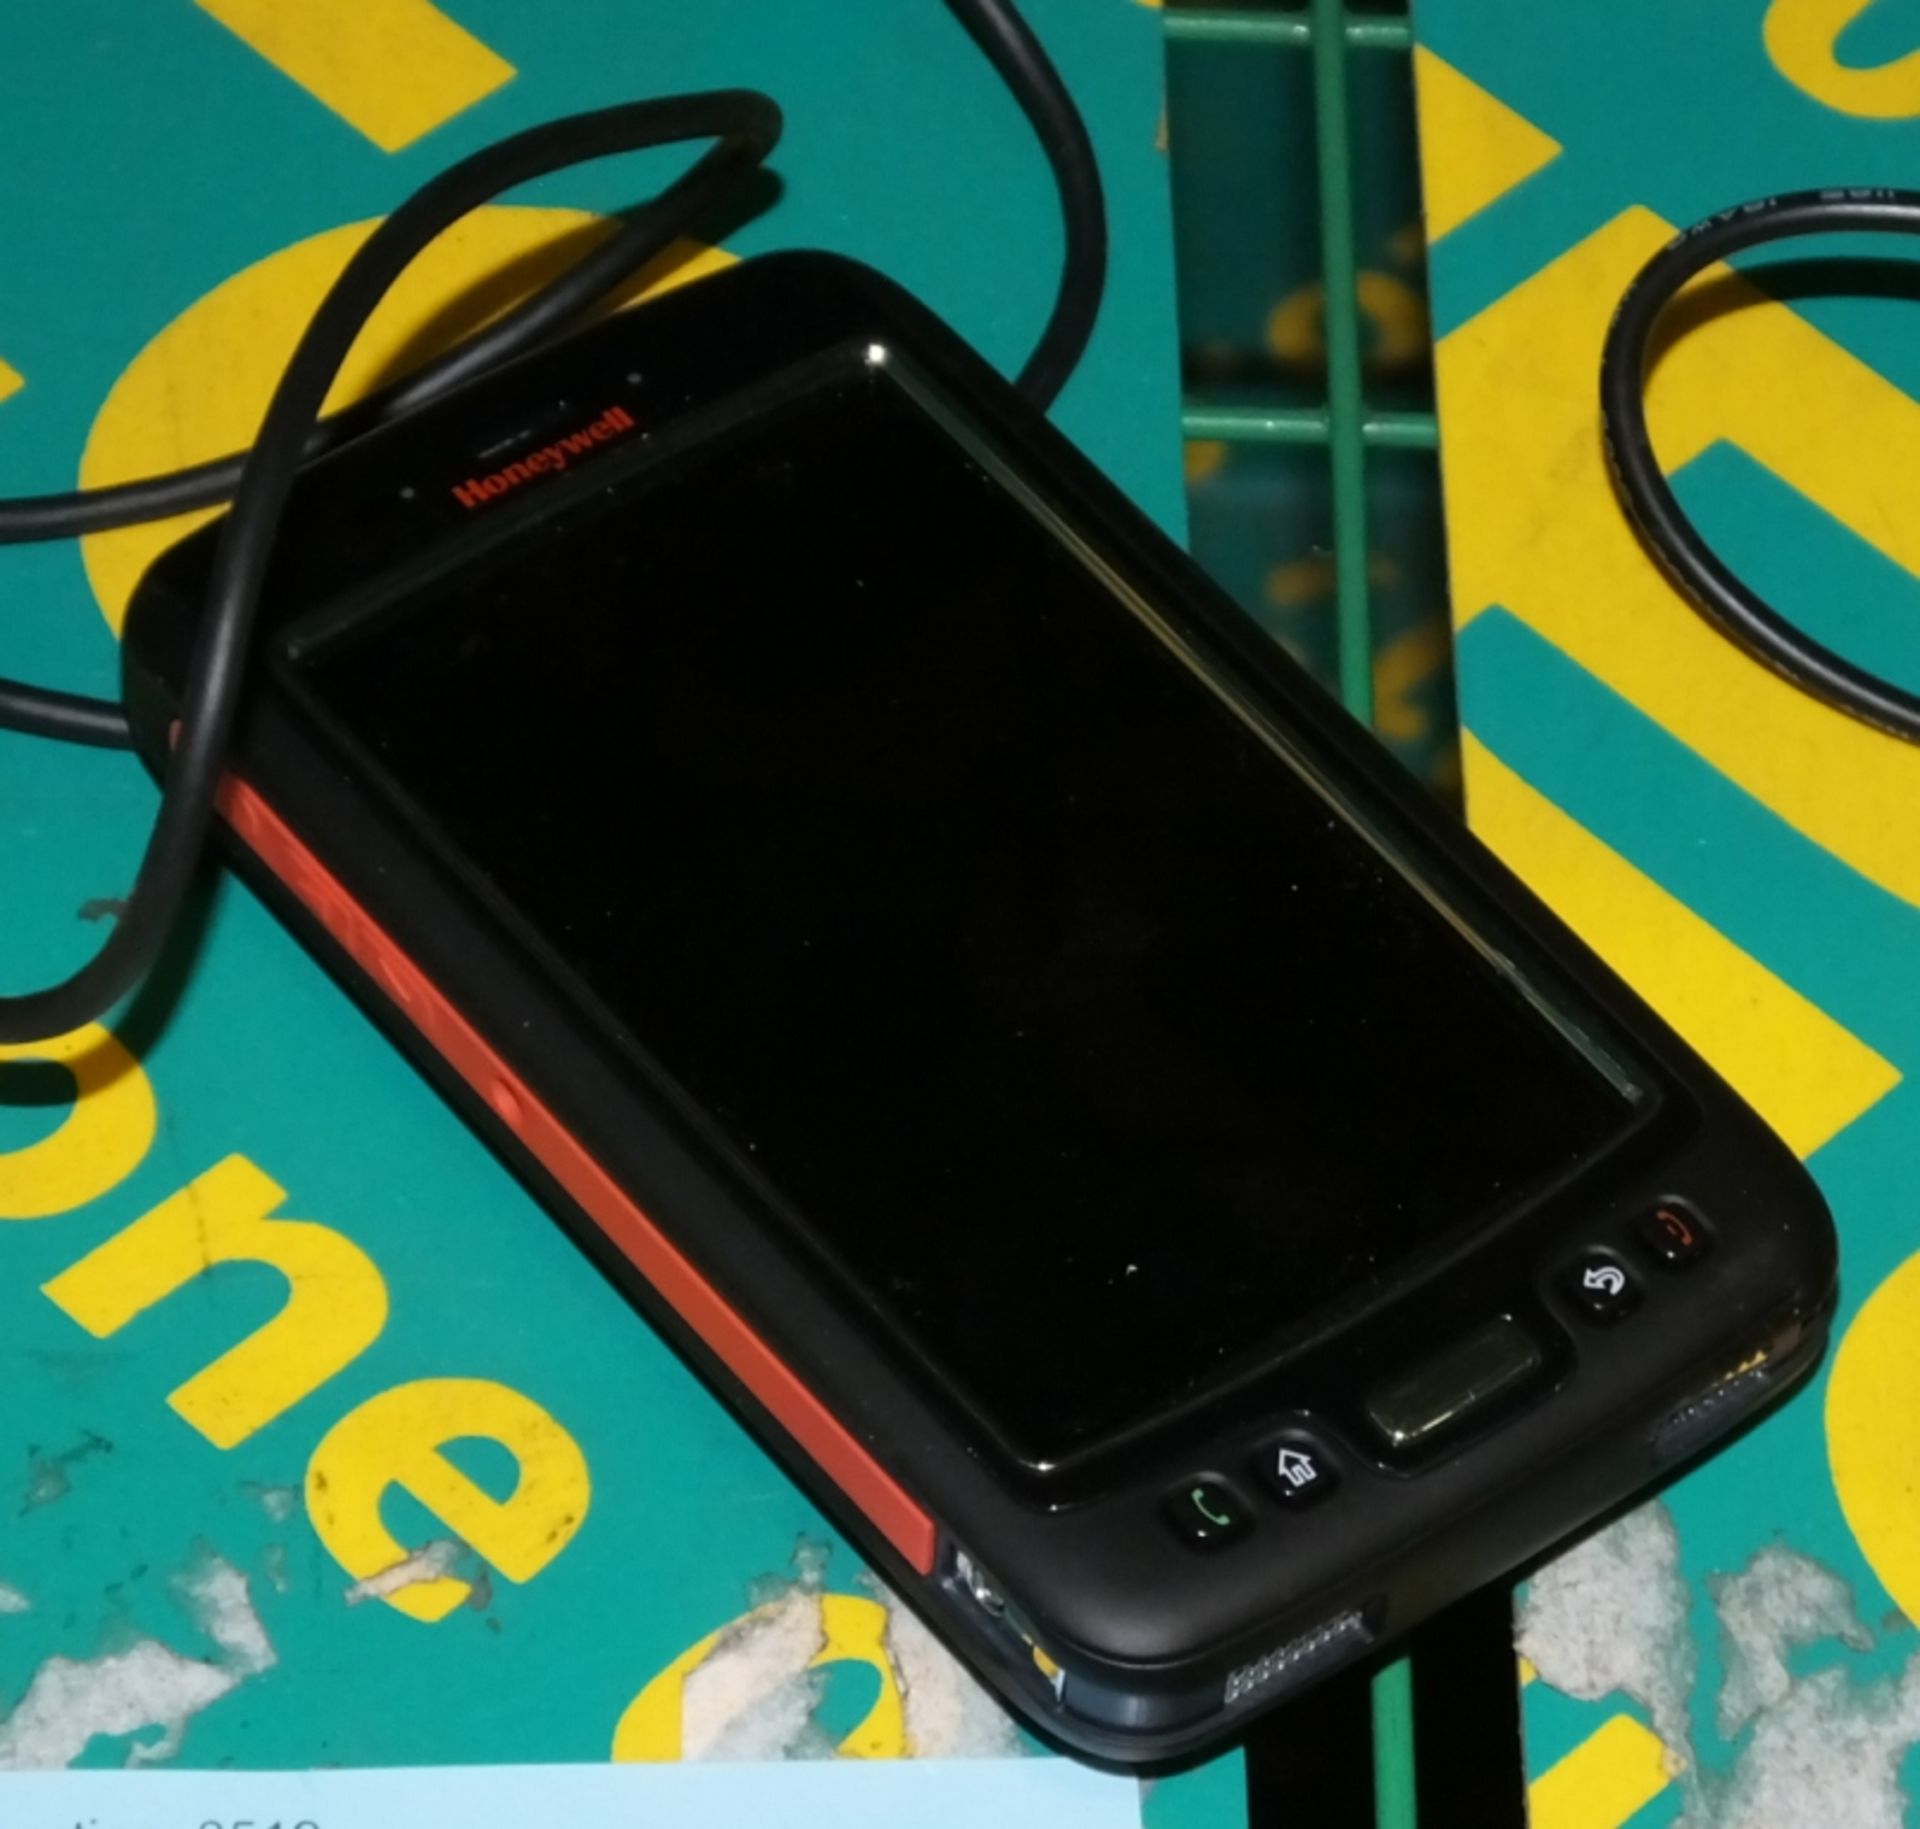 Honewell Dolphin 70e - Handheld Phone - Image 2 of 2